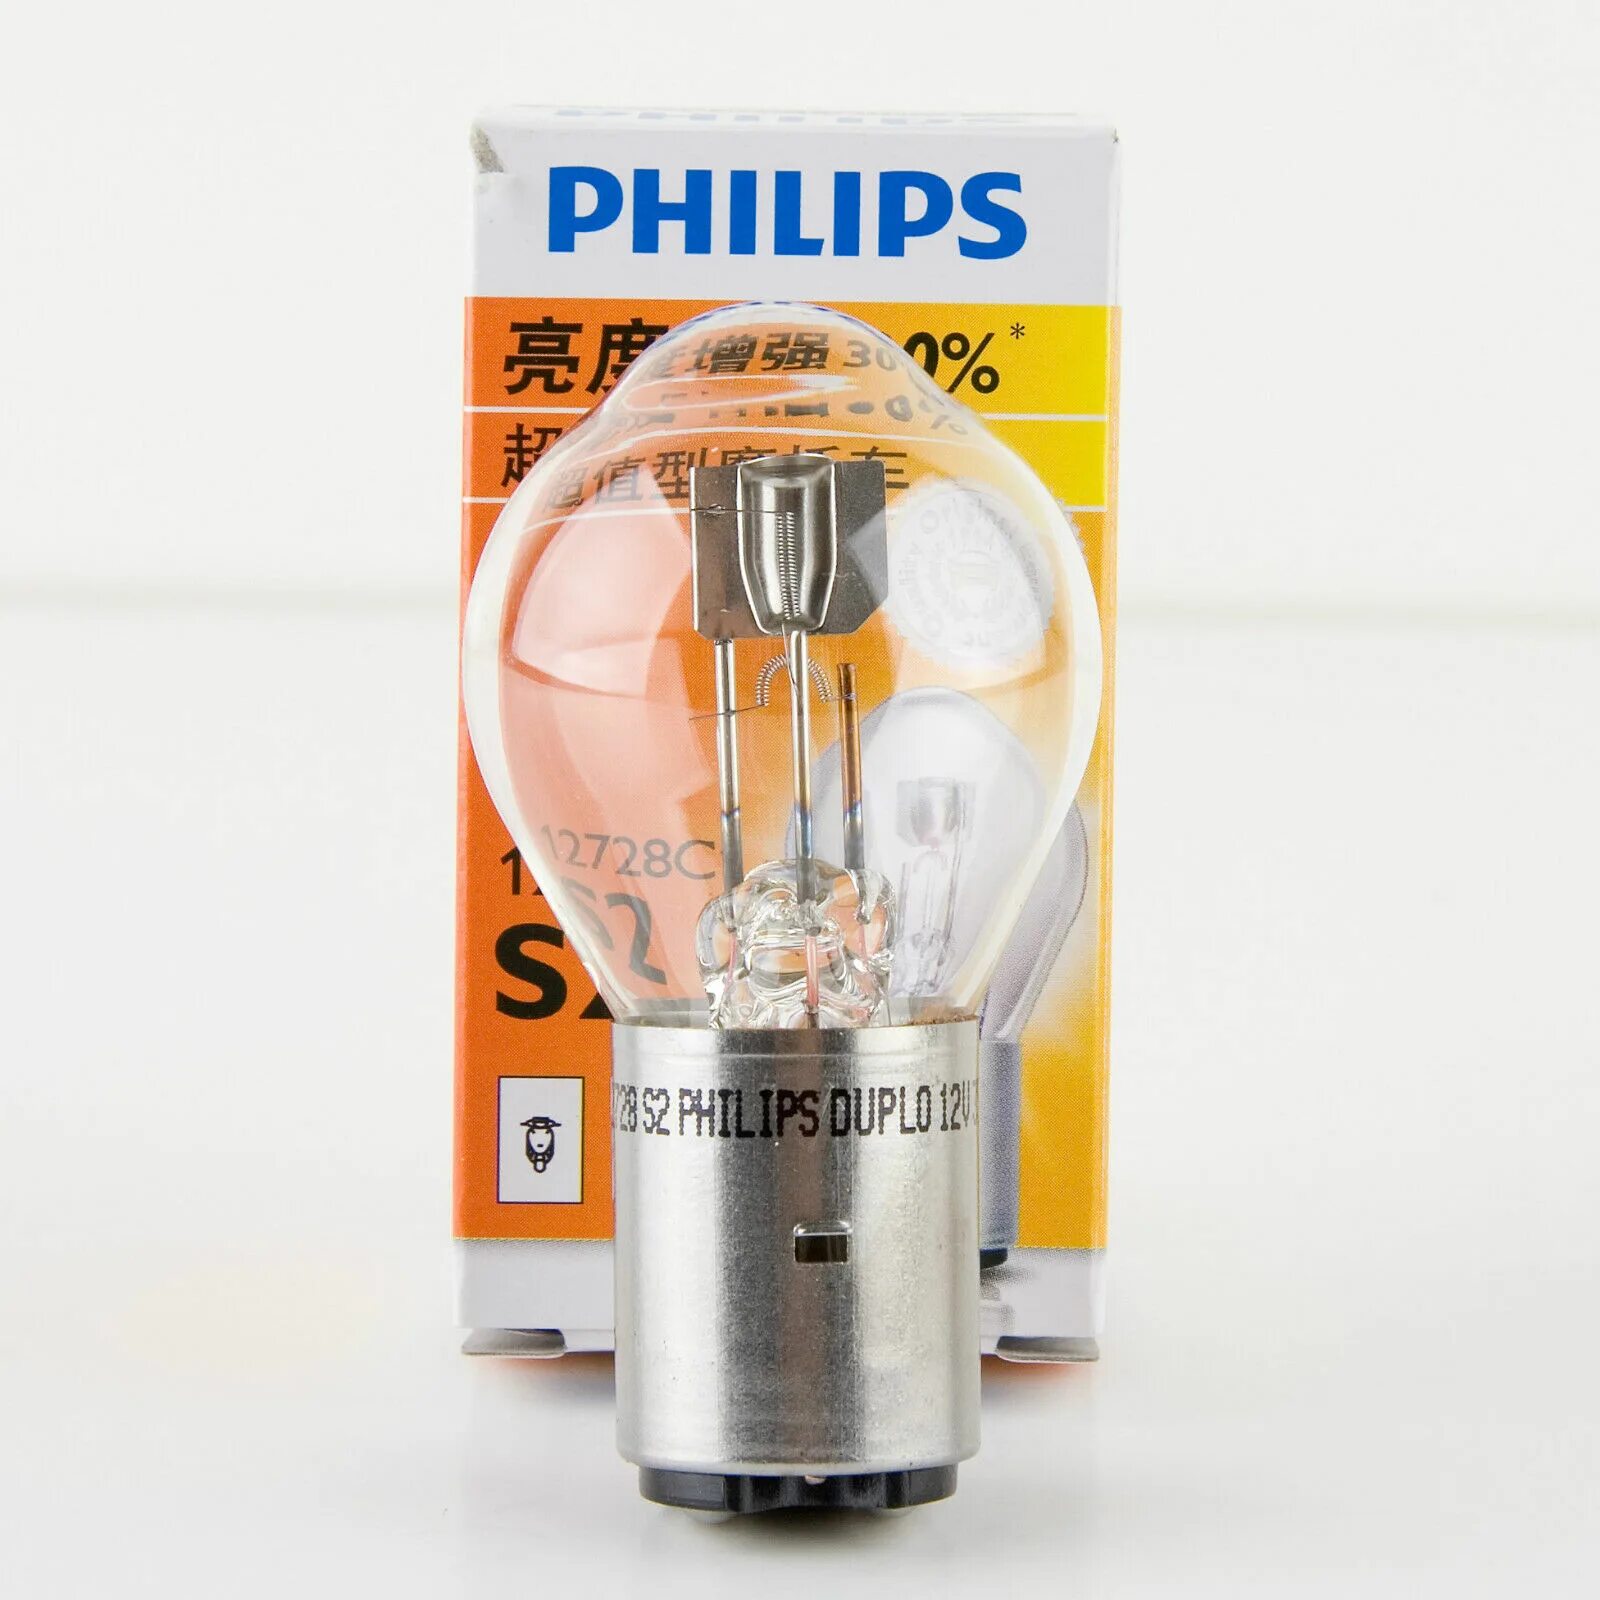 12v 35 35w. Лампа Philips Duplo 12v 35/35w светодиодная. Лампа Филипс s2 ba20d 12 v 35/35 w. Лампа ba20d 12v 35/35w светодиодная. Лампочка Филипс 12v 35w.